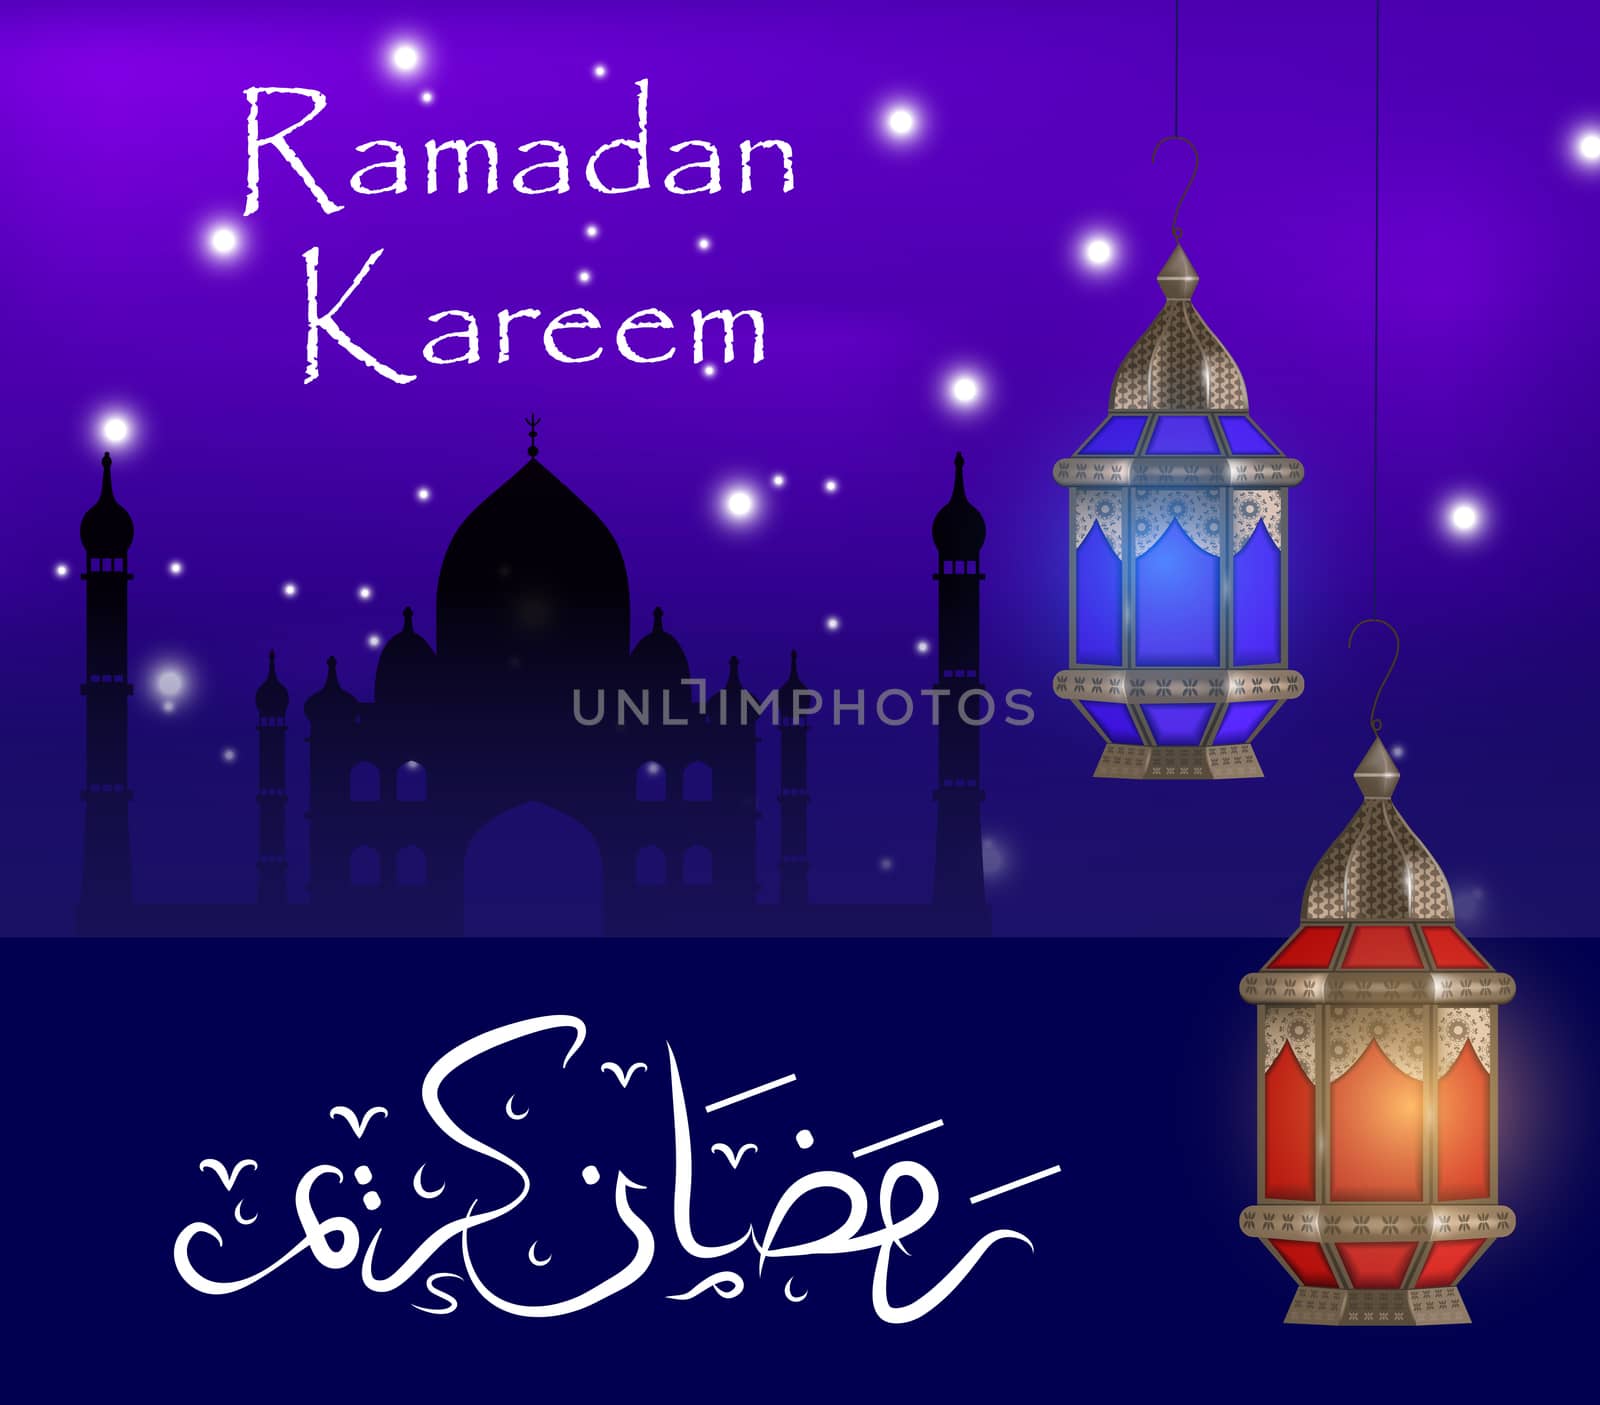 Ramadan Kareem greeting card with lanterns, template for invitation, flyer. Muslim religious holiday. illustration